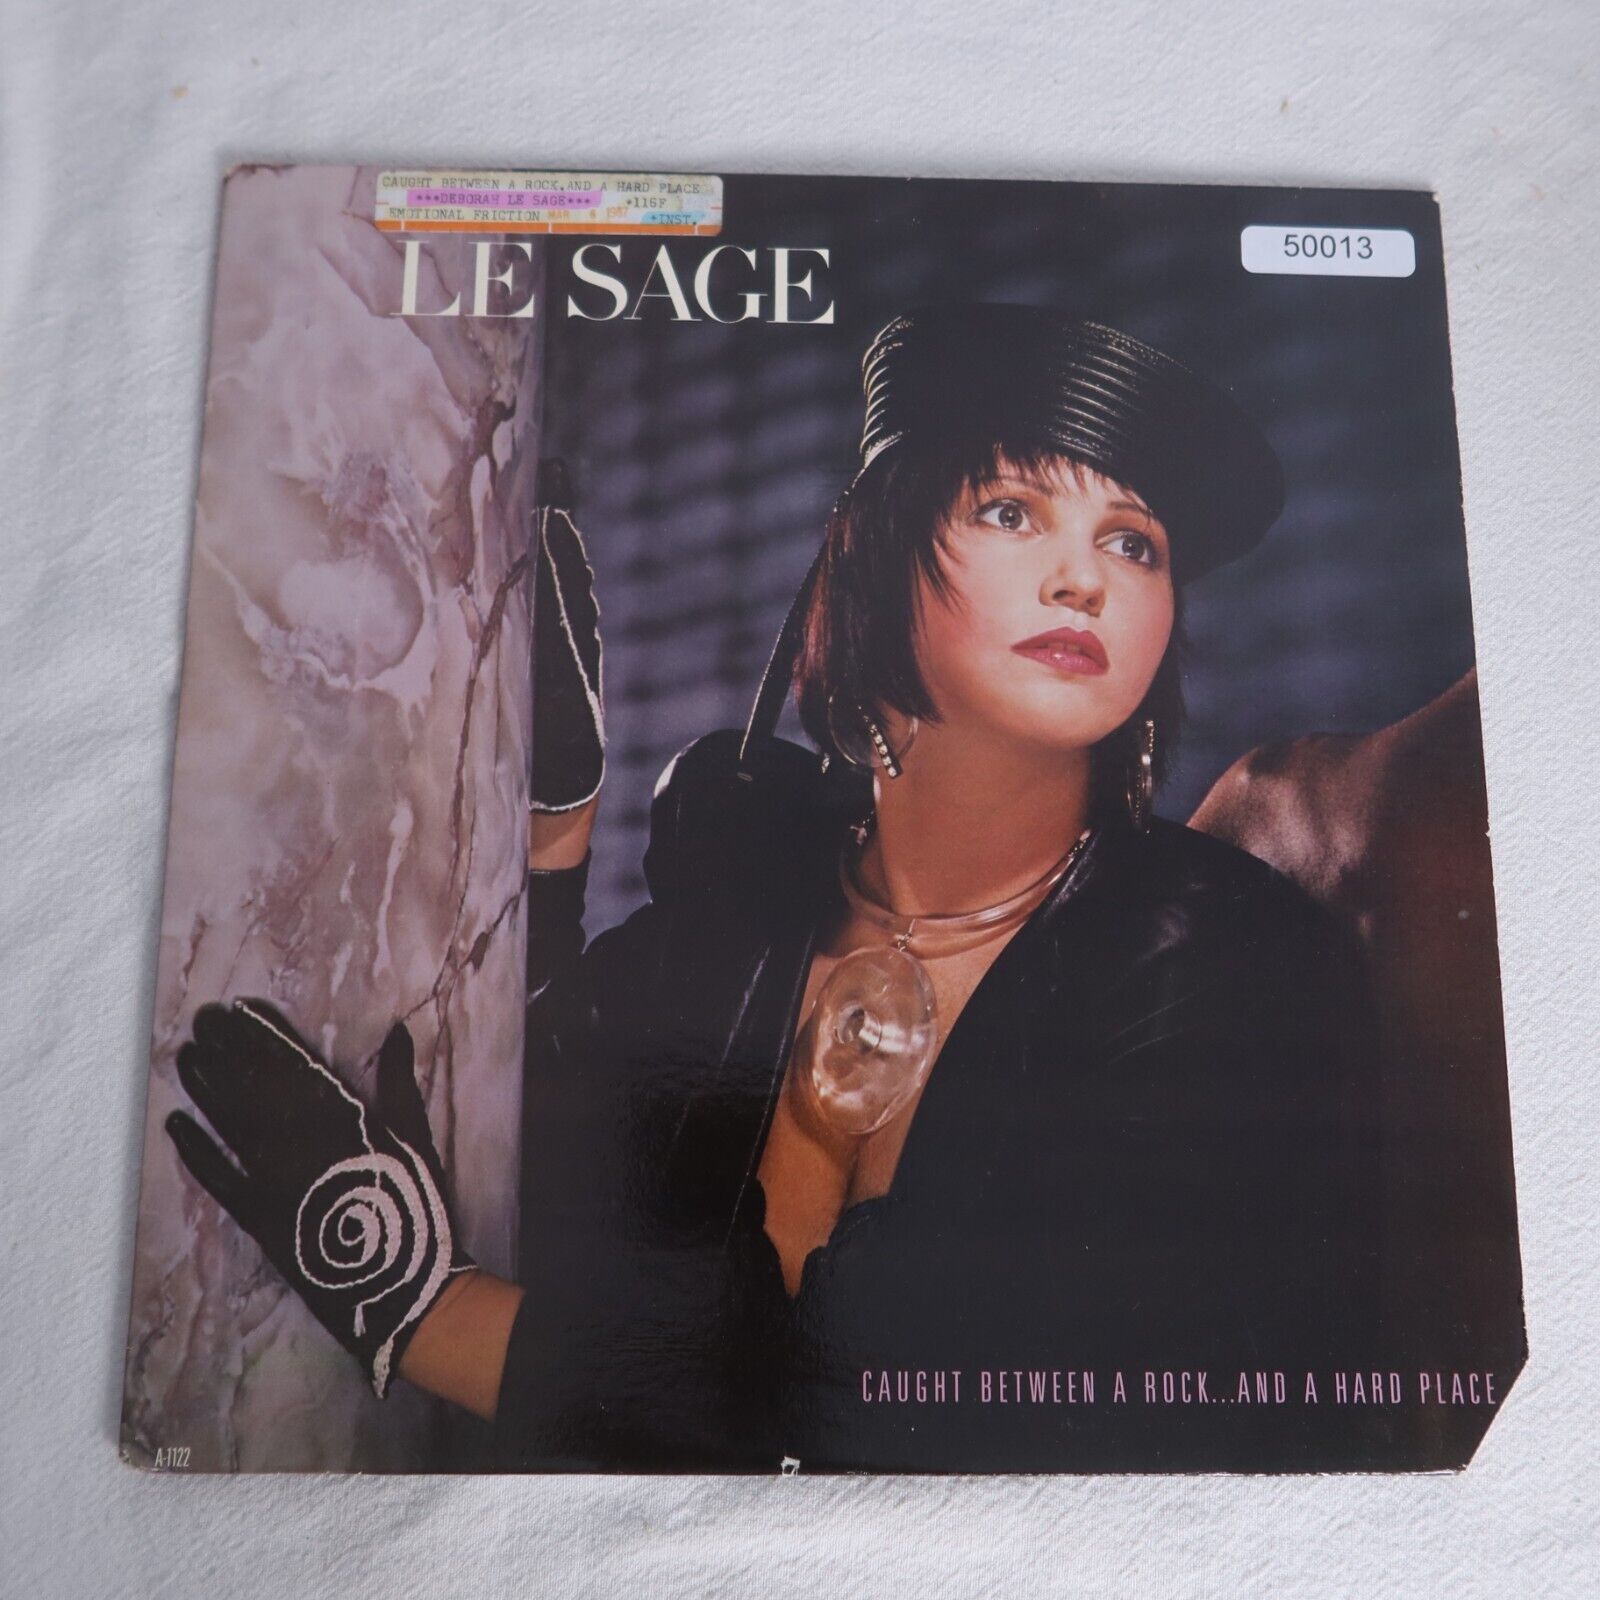 Deborah Le Sage Caught Between A Rock And A Hard Place SINGLE Vinyl Record Albu